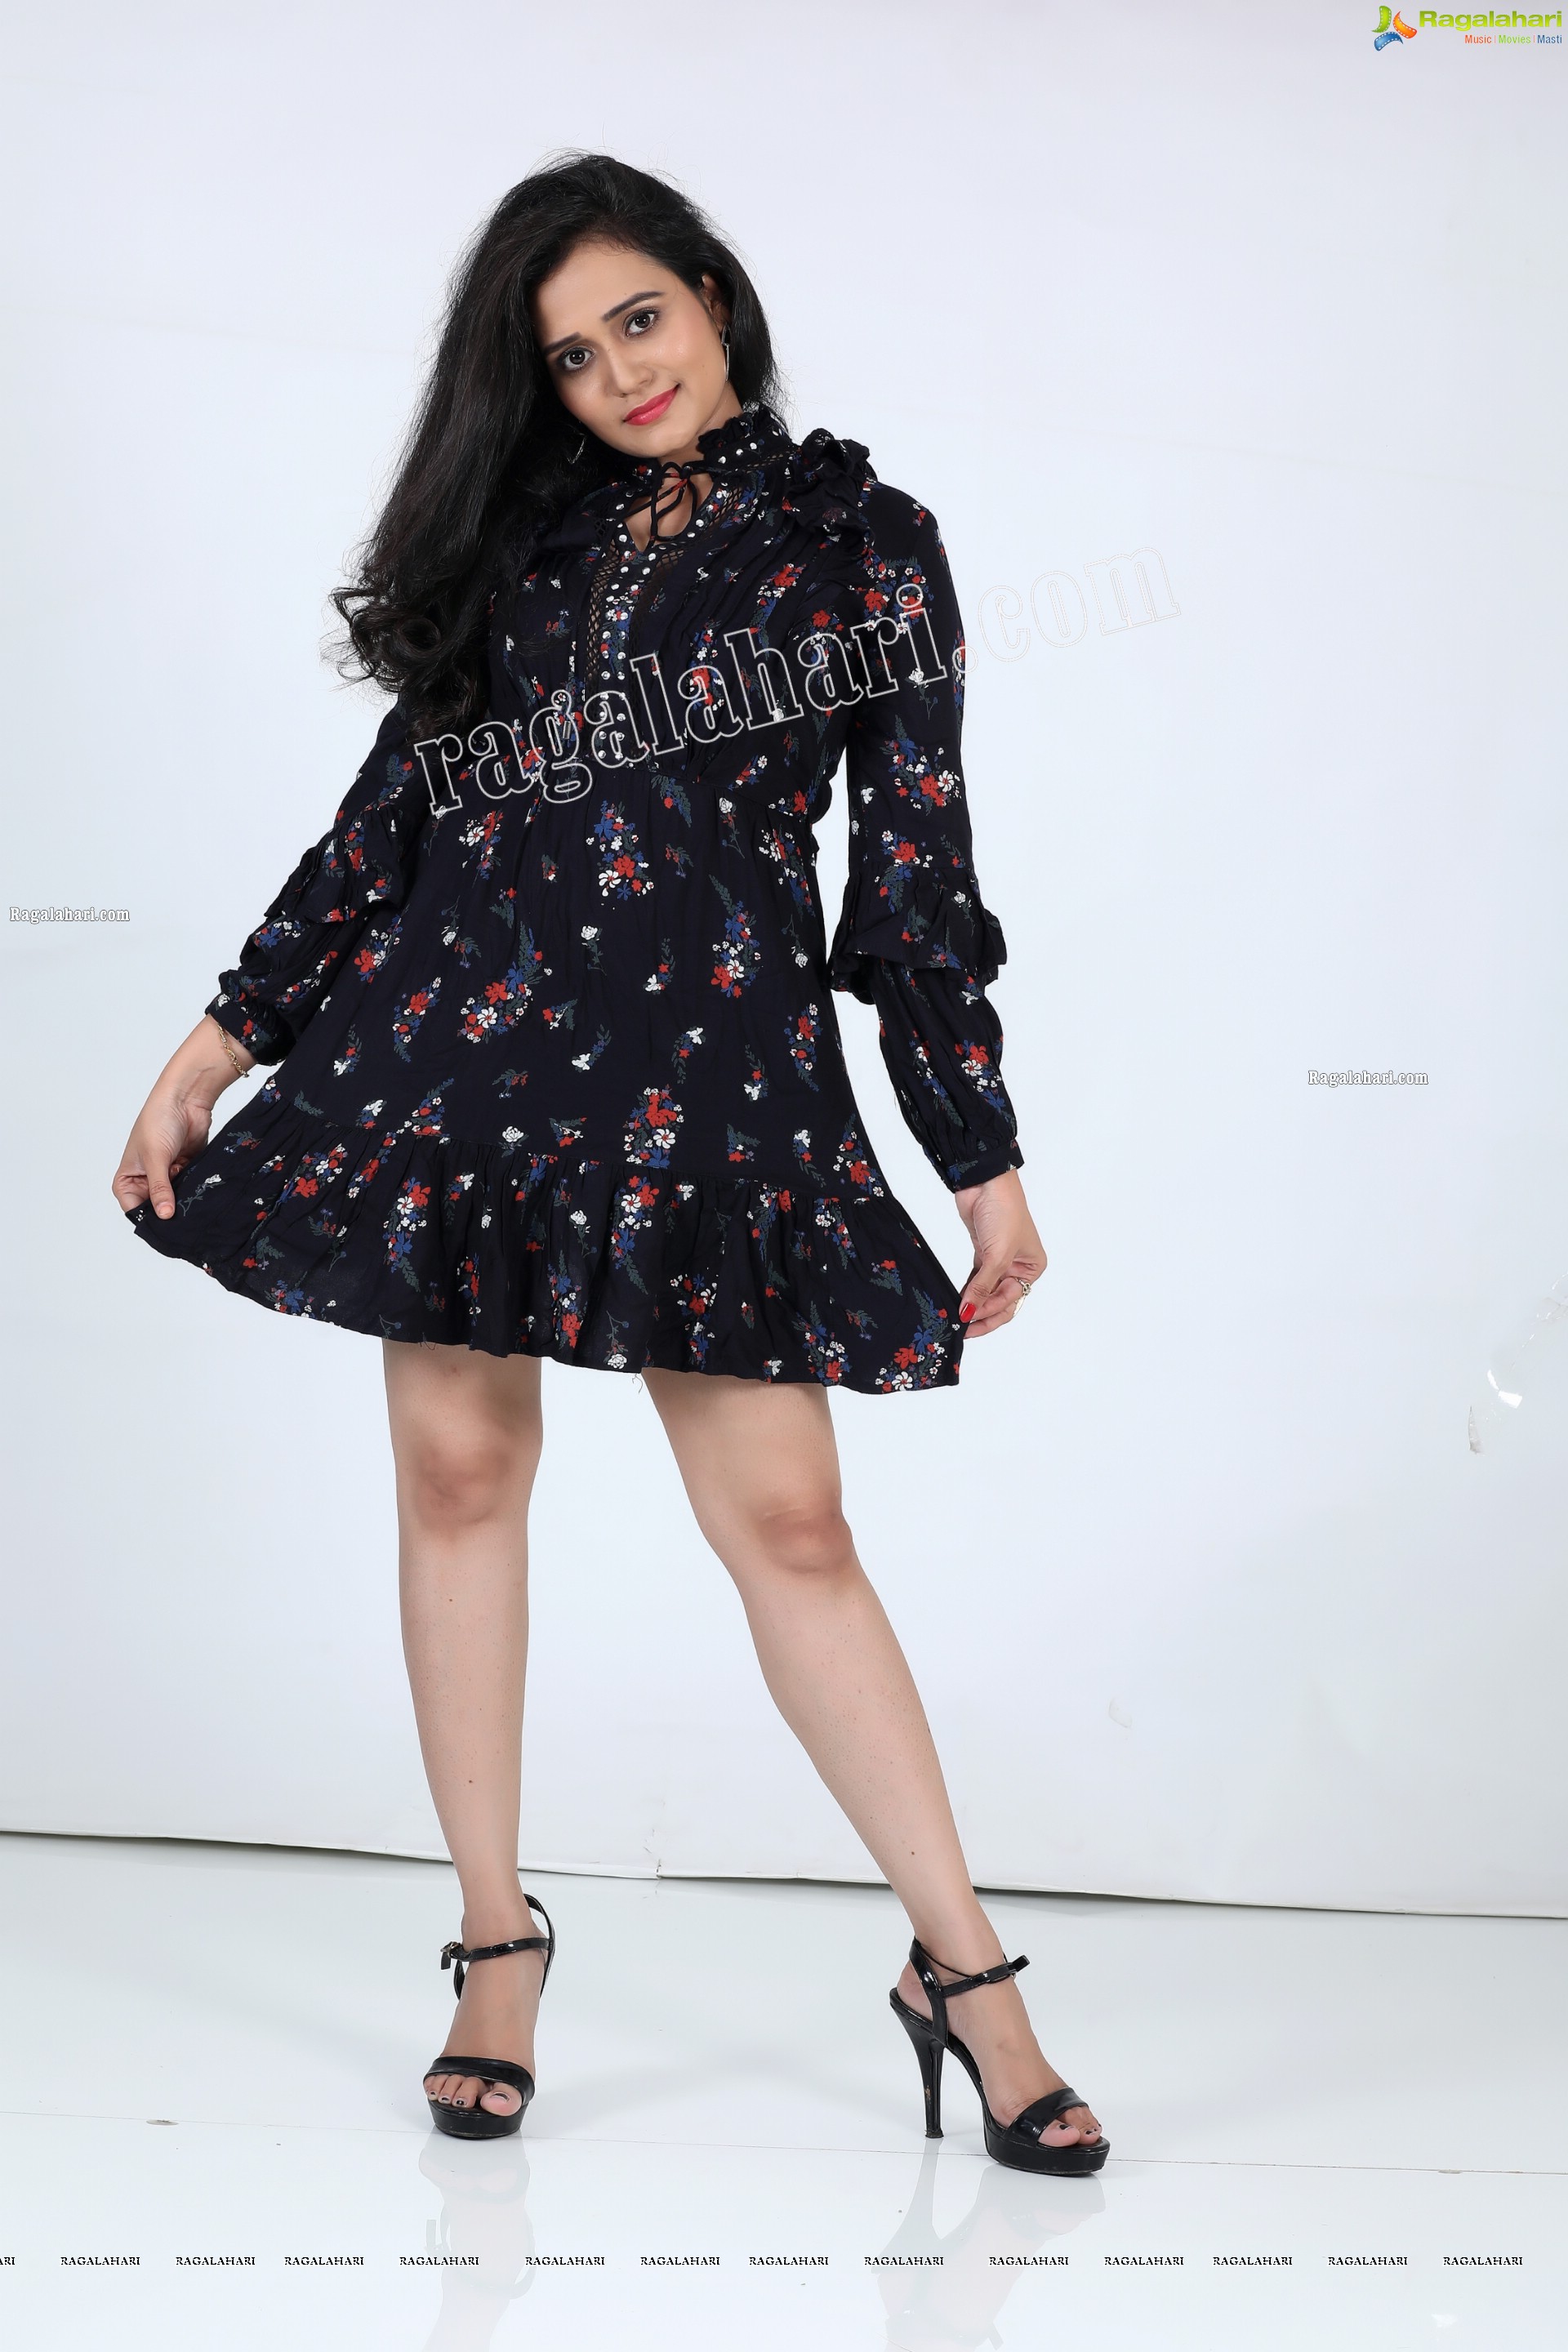 VJ Jaanu in Black Floral Print Mini Dress Exclusive Photo Shoot